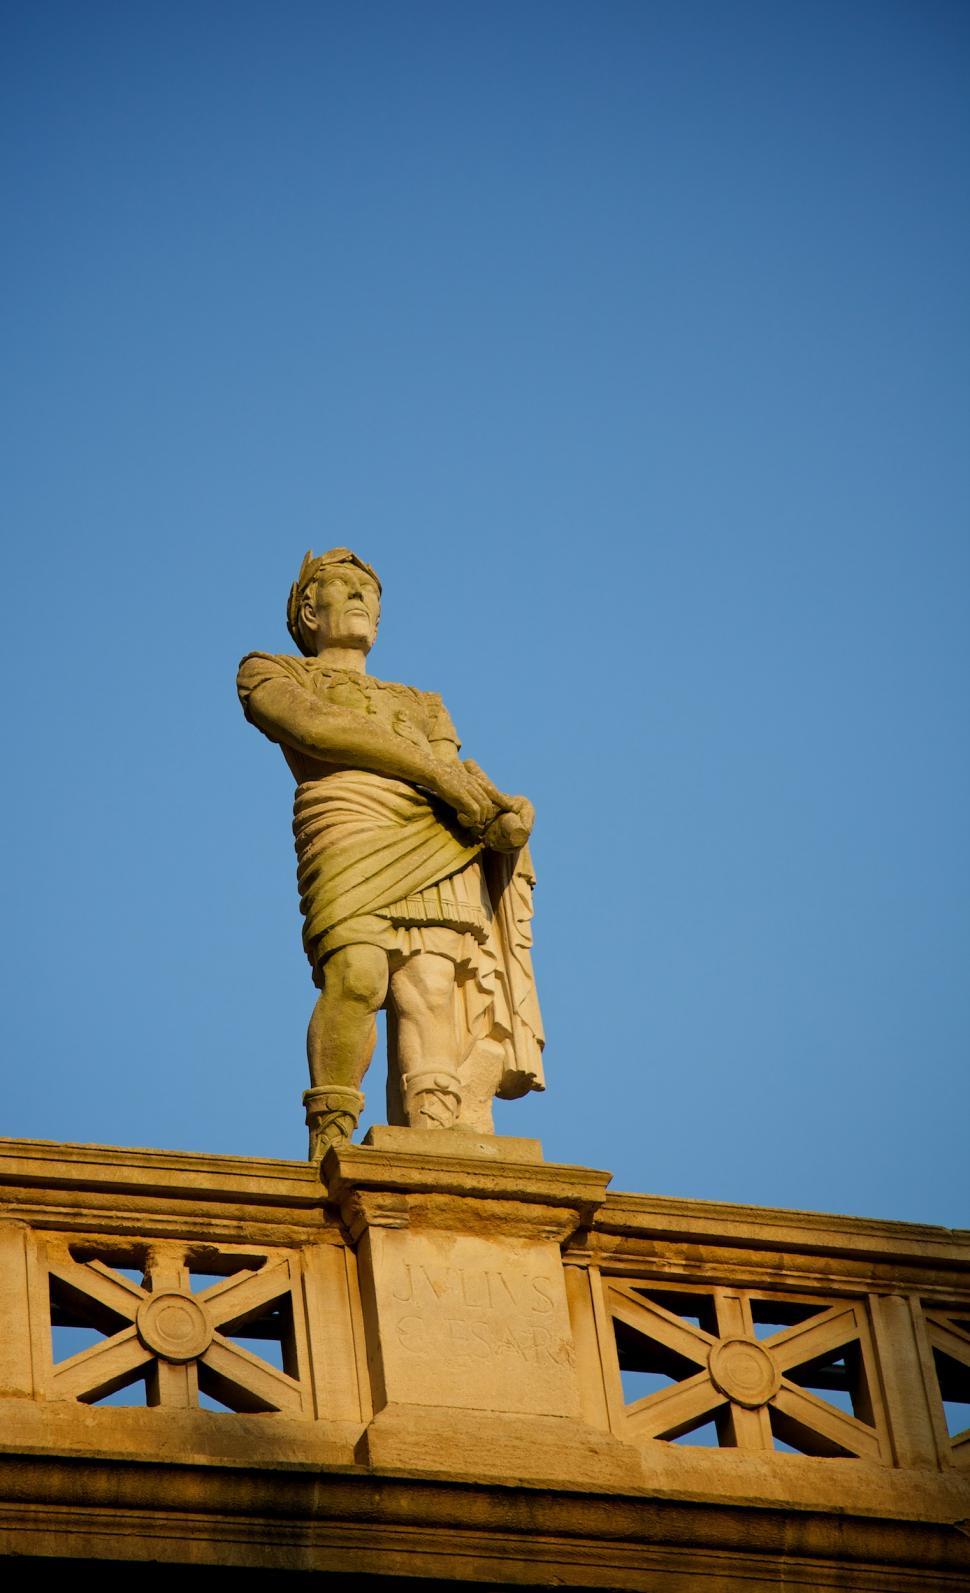 Free Image of Statue of Man Standing on Top of Bridge 